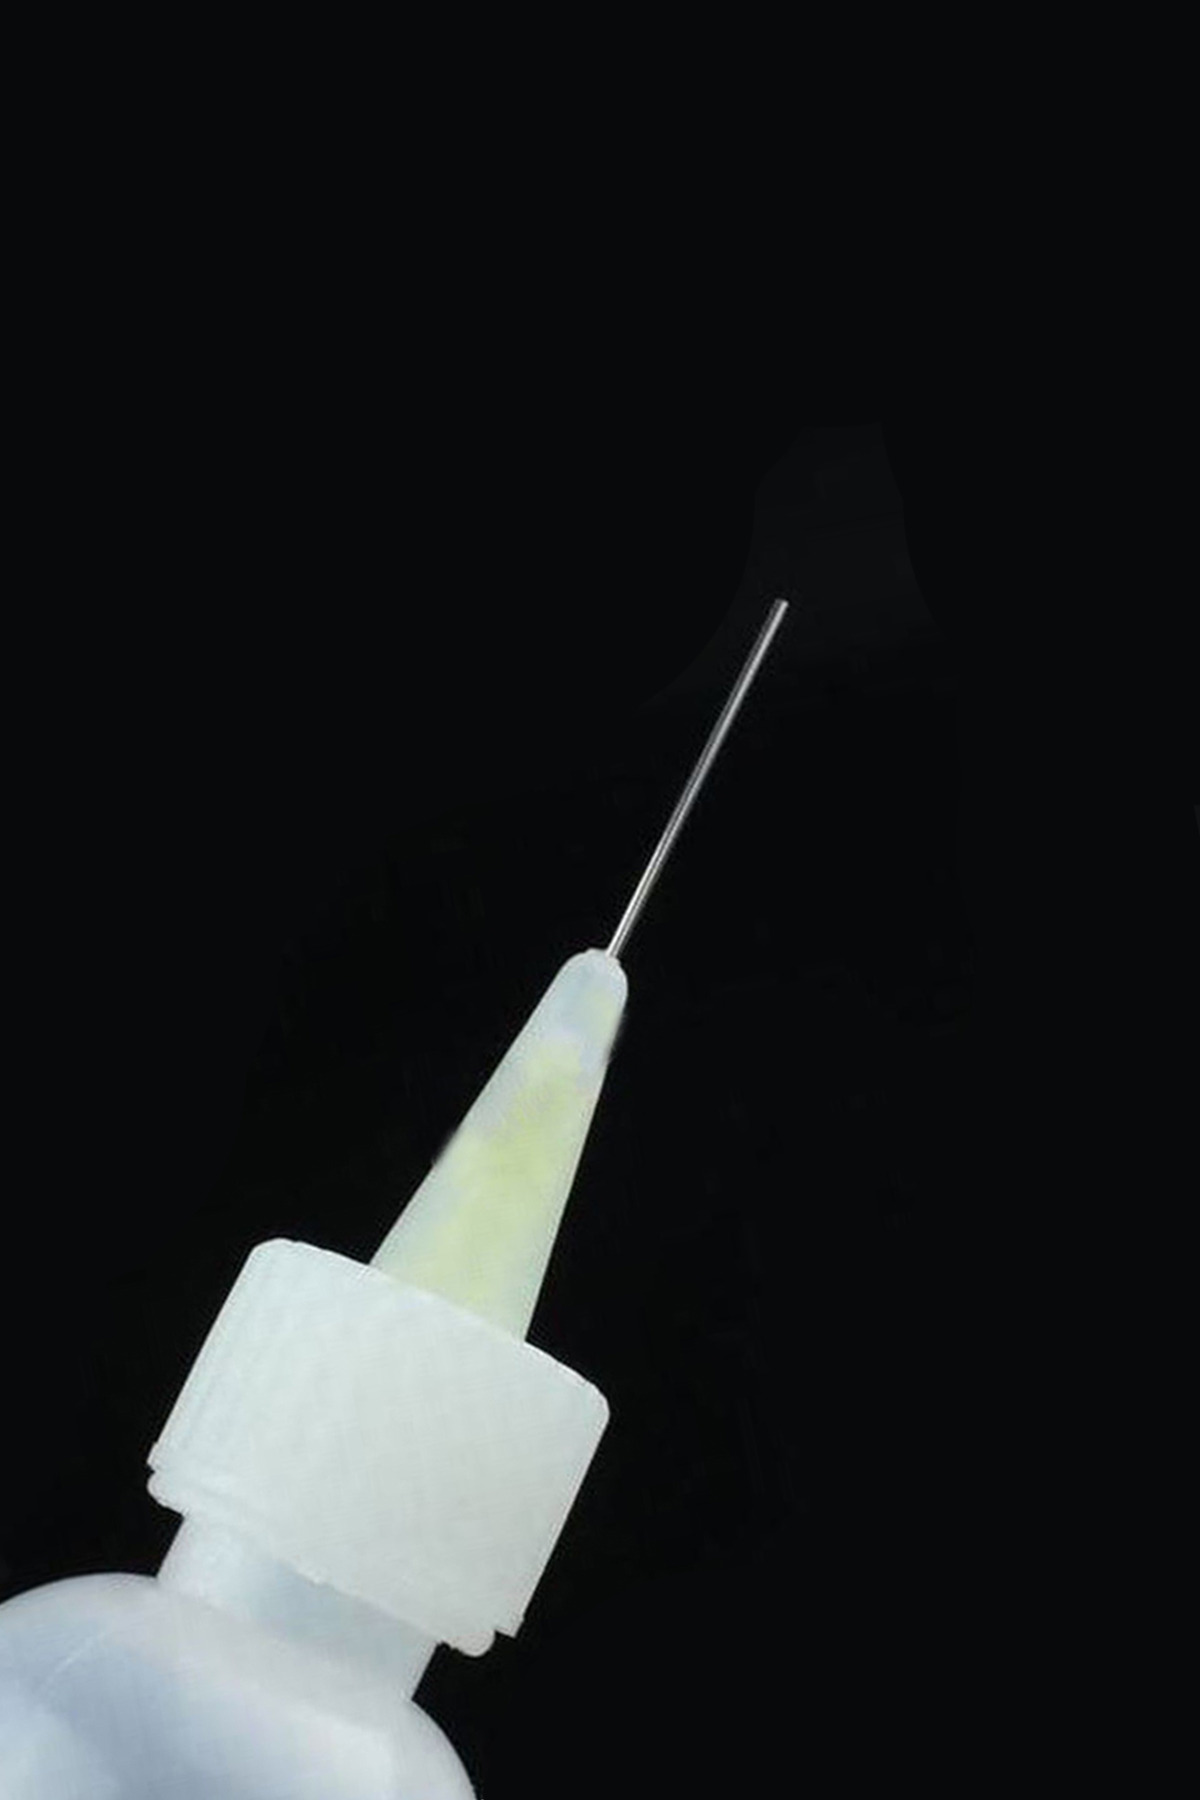 Microlux FX-50 İğne Uclu Plastik Sıvı Şişesi 50ml